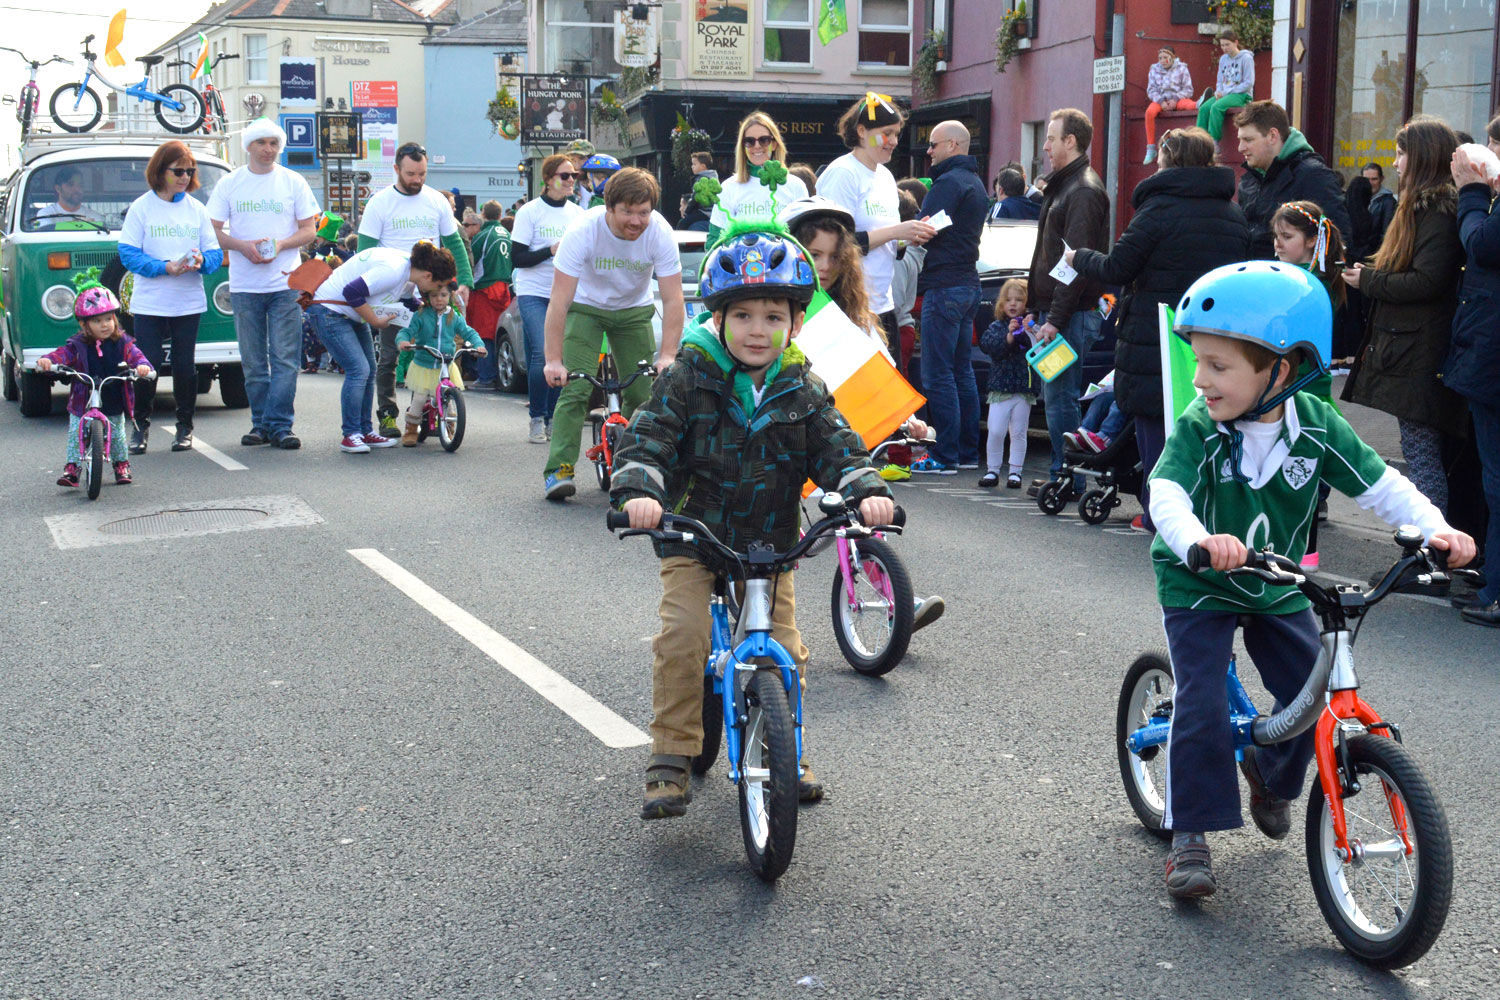 Kids on their balance bike as the St.Patrick's parade